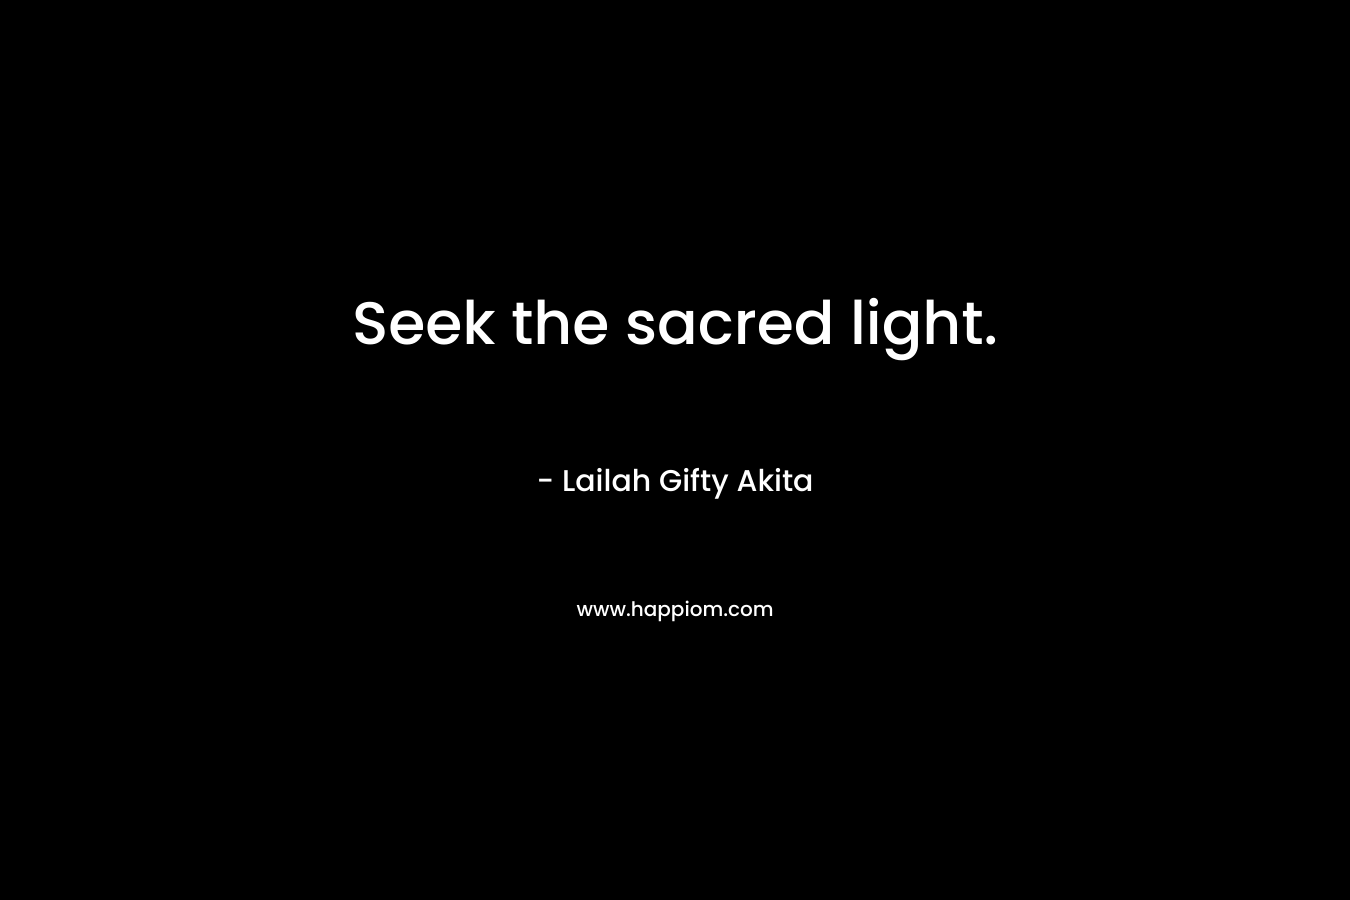 Seek the sacred light.